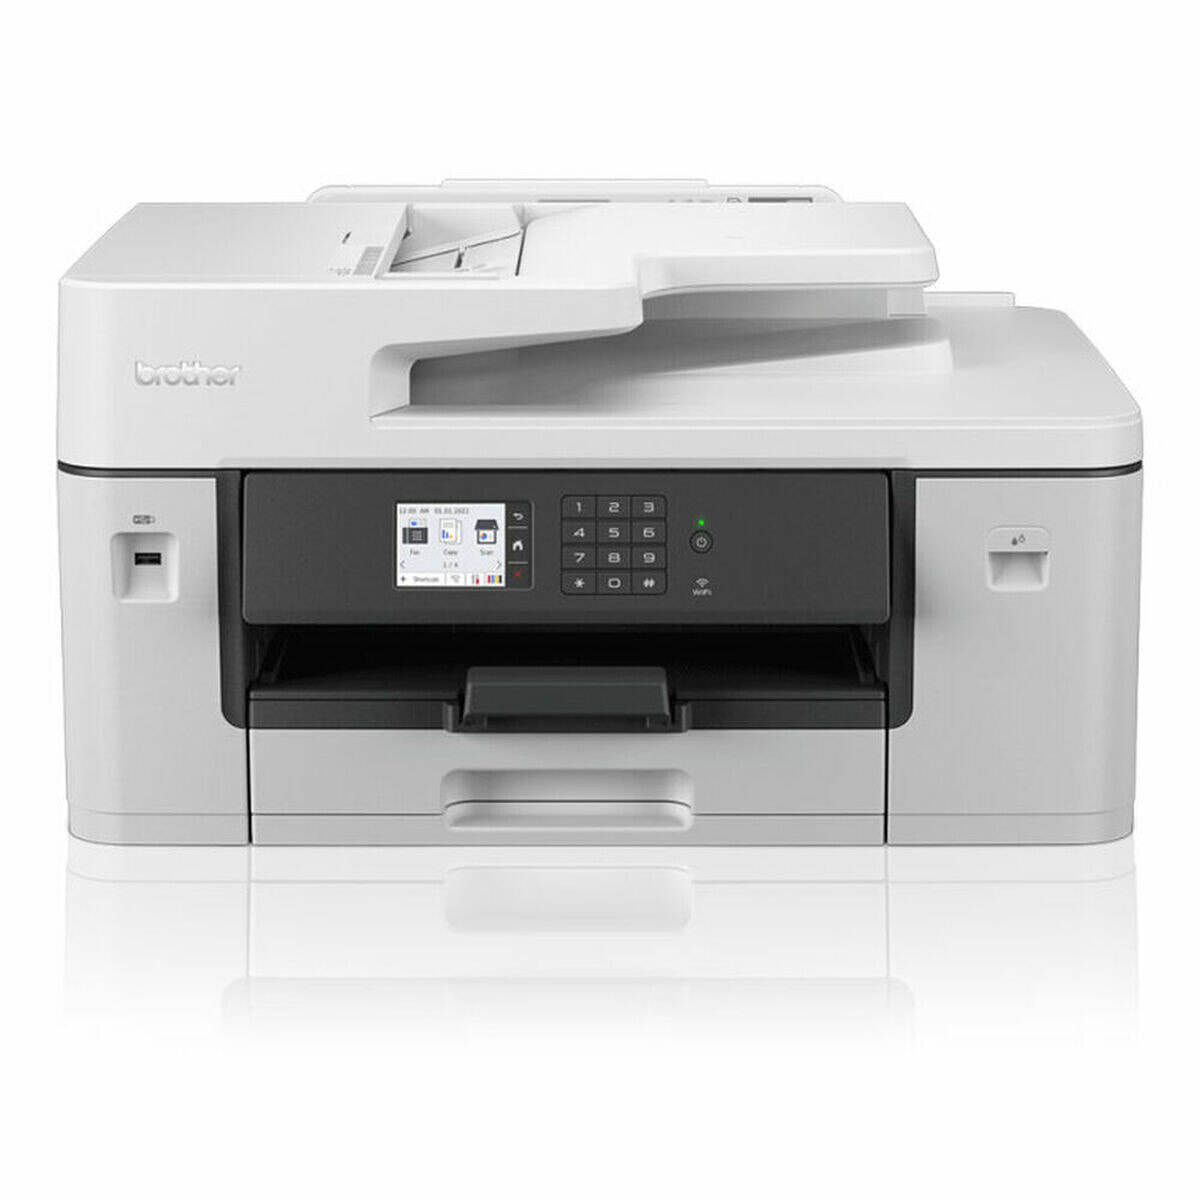 Multifunction Printer Brother MFC-J6540DW